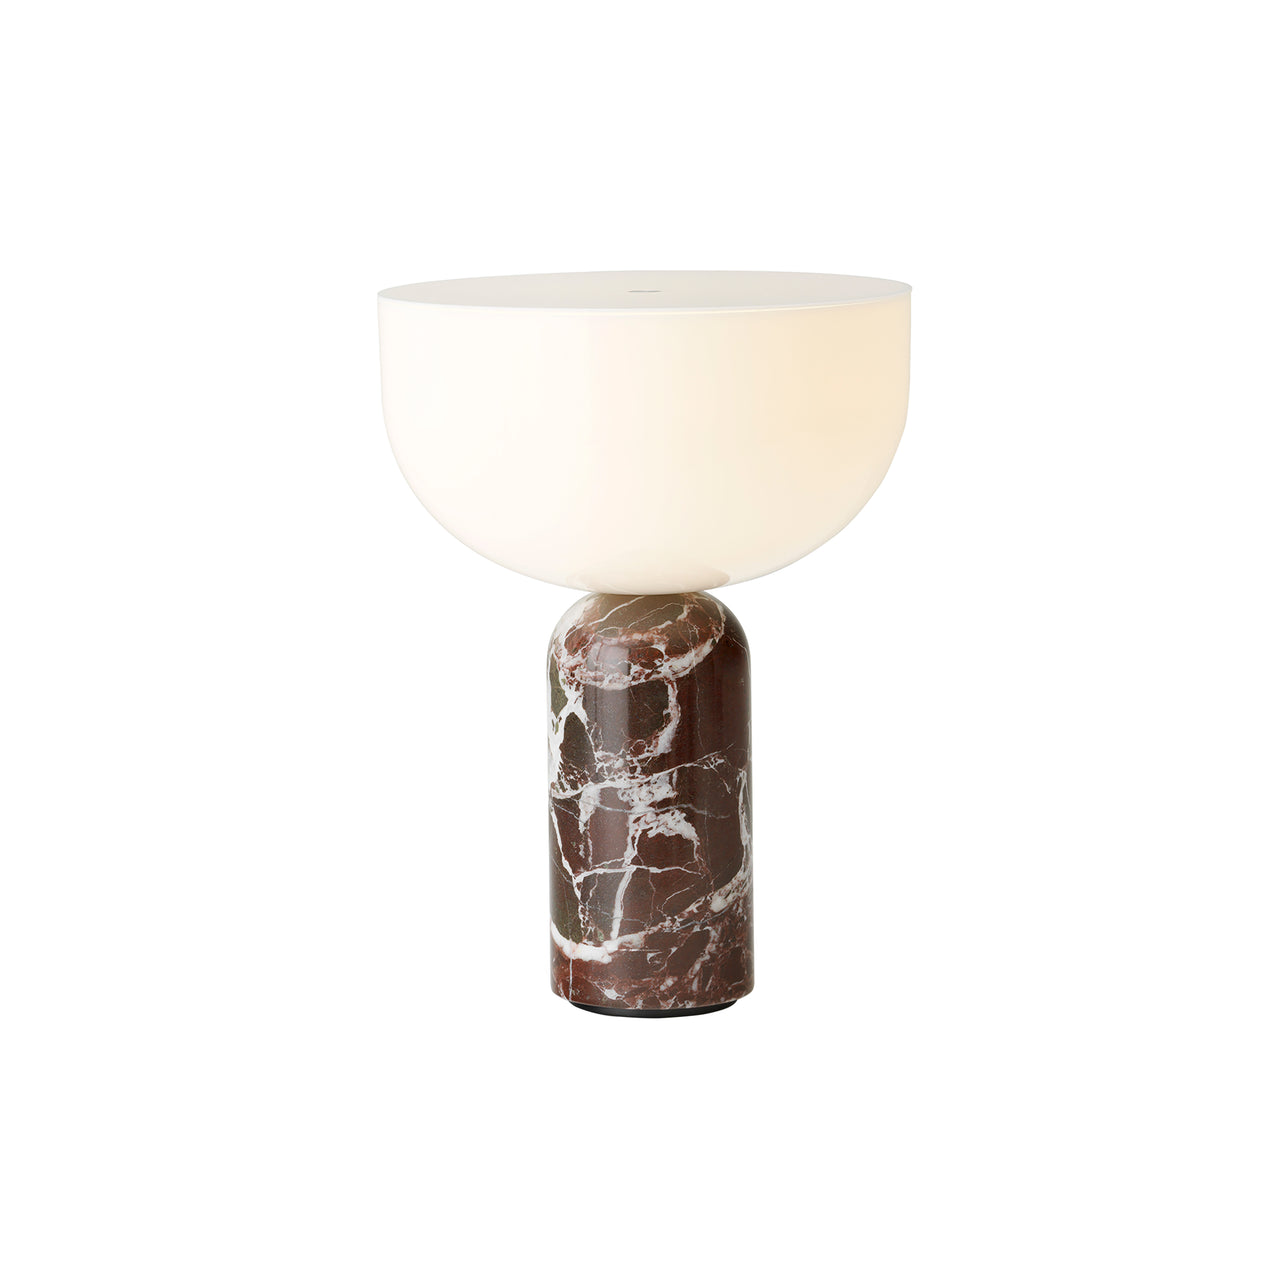 Kizu Portable Table Lamp: Rosso Levanto Marble